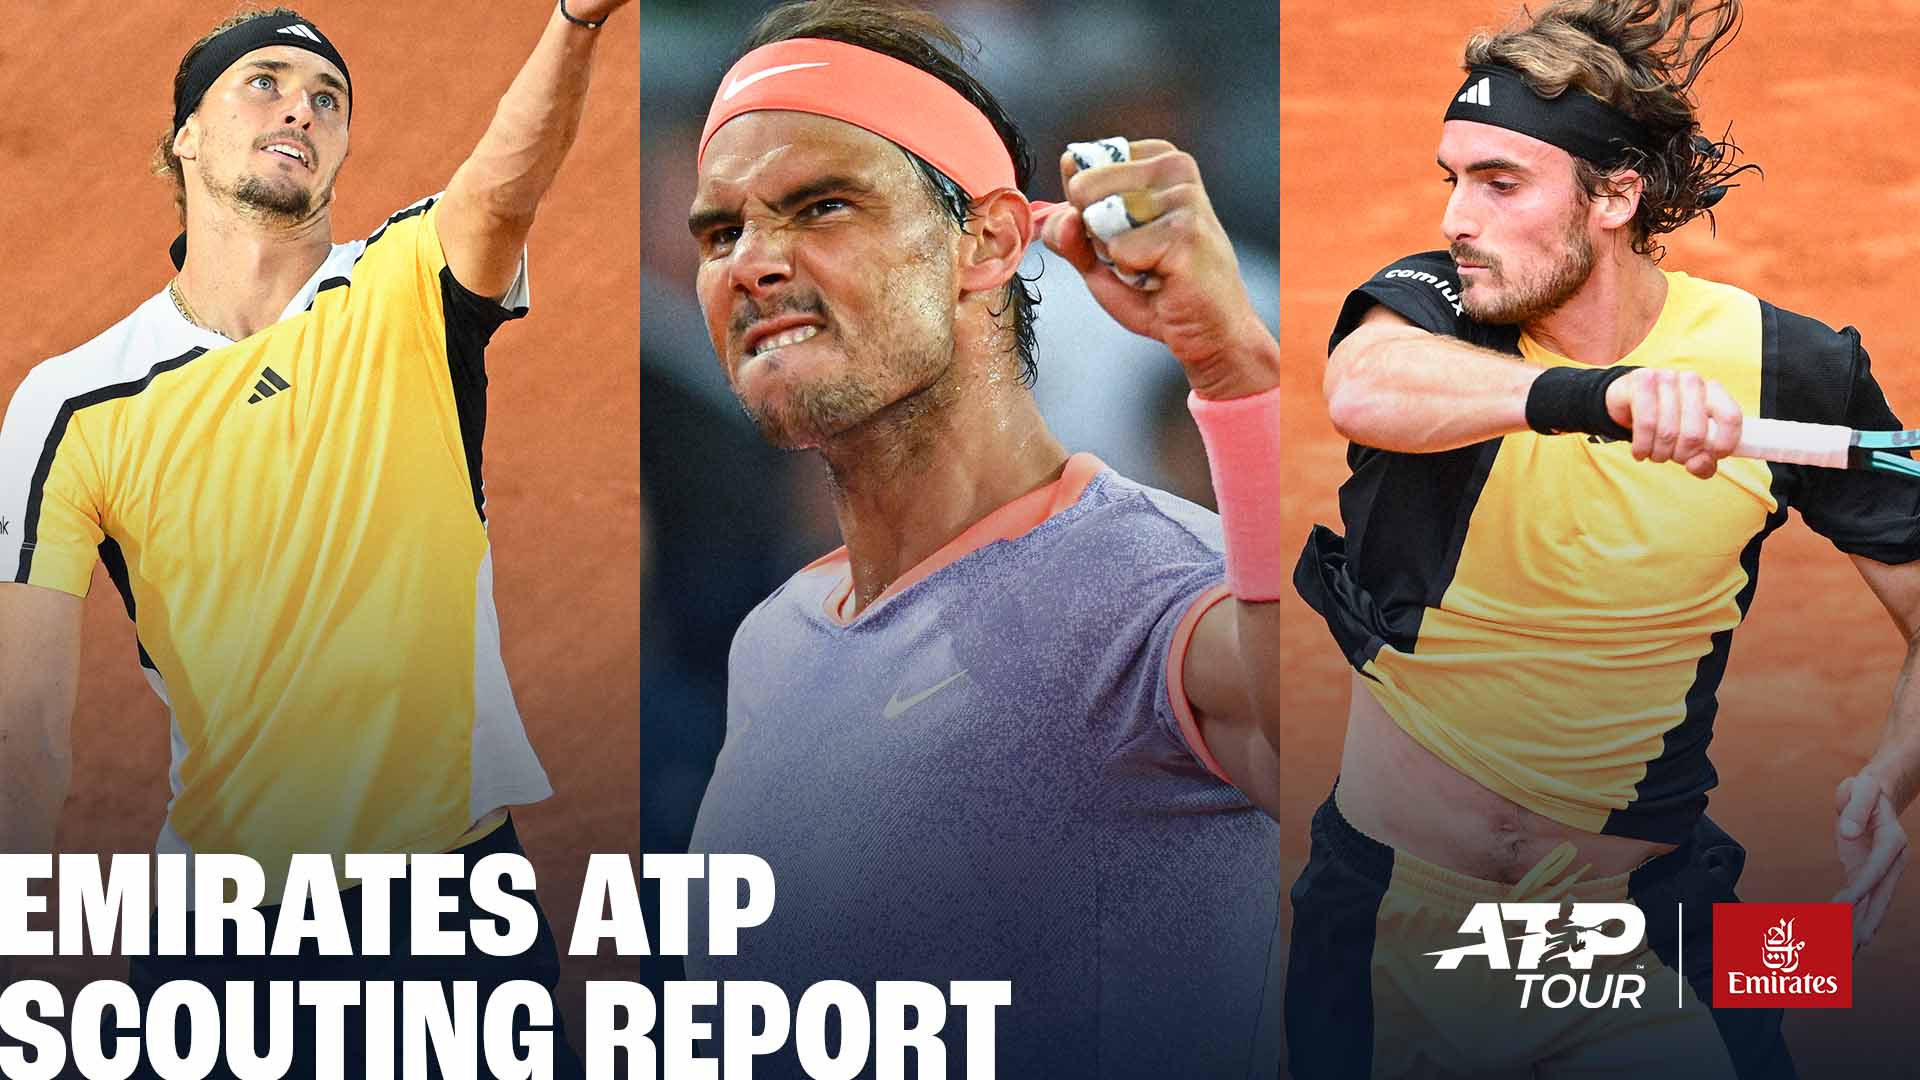 Alexander Zverev, Rafael Nadal and Stefanos Tsitsipas compete on the ATP Tour this week.